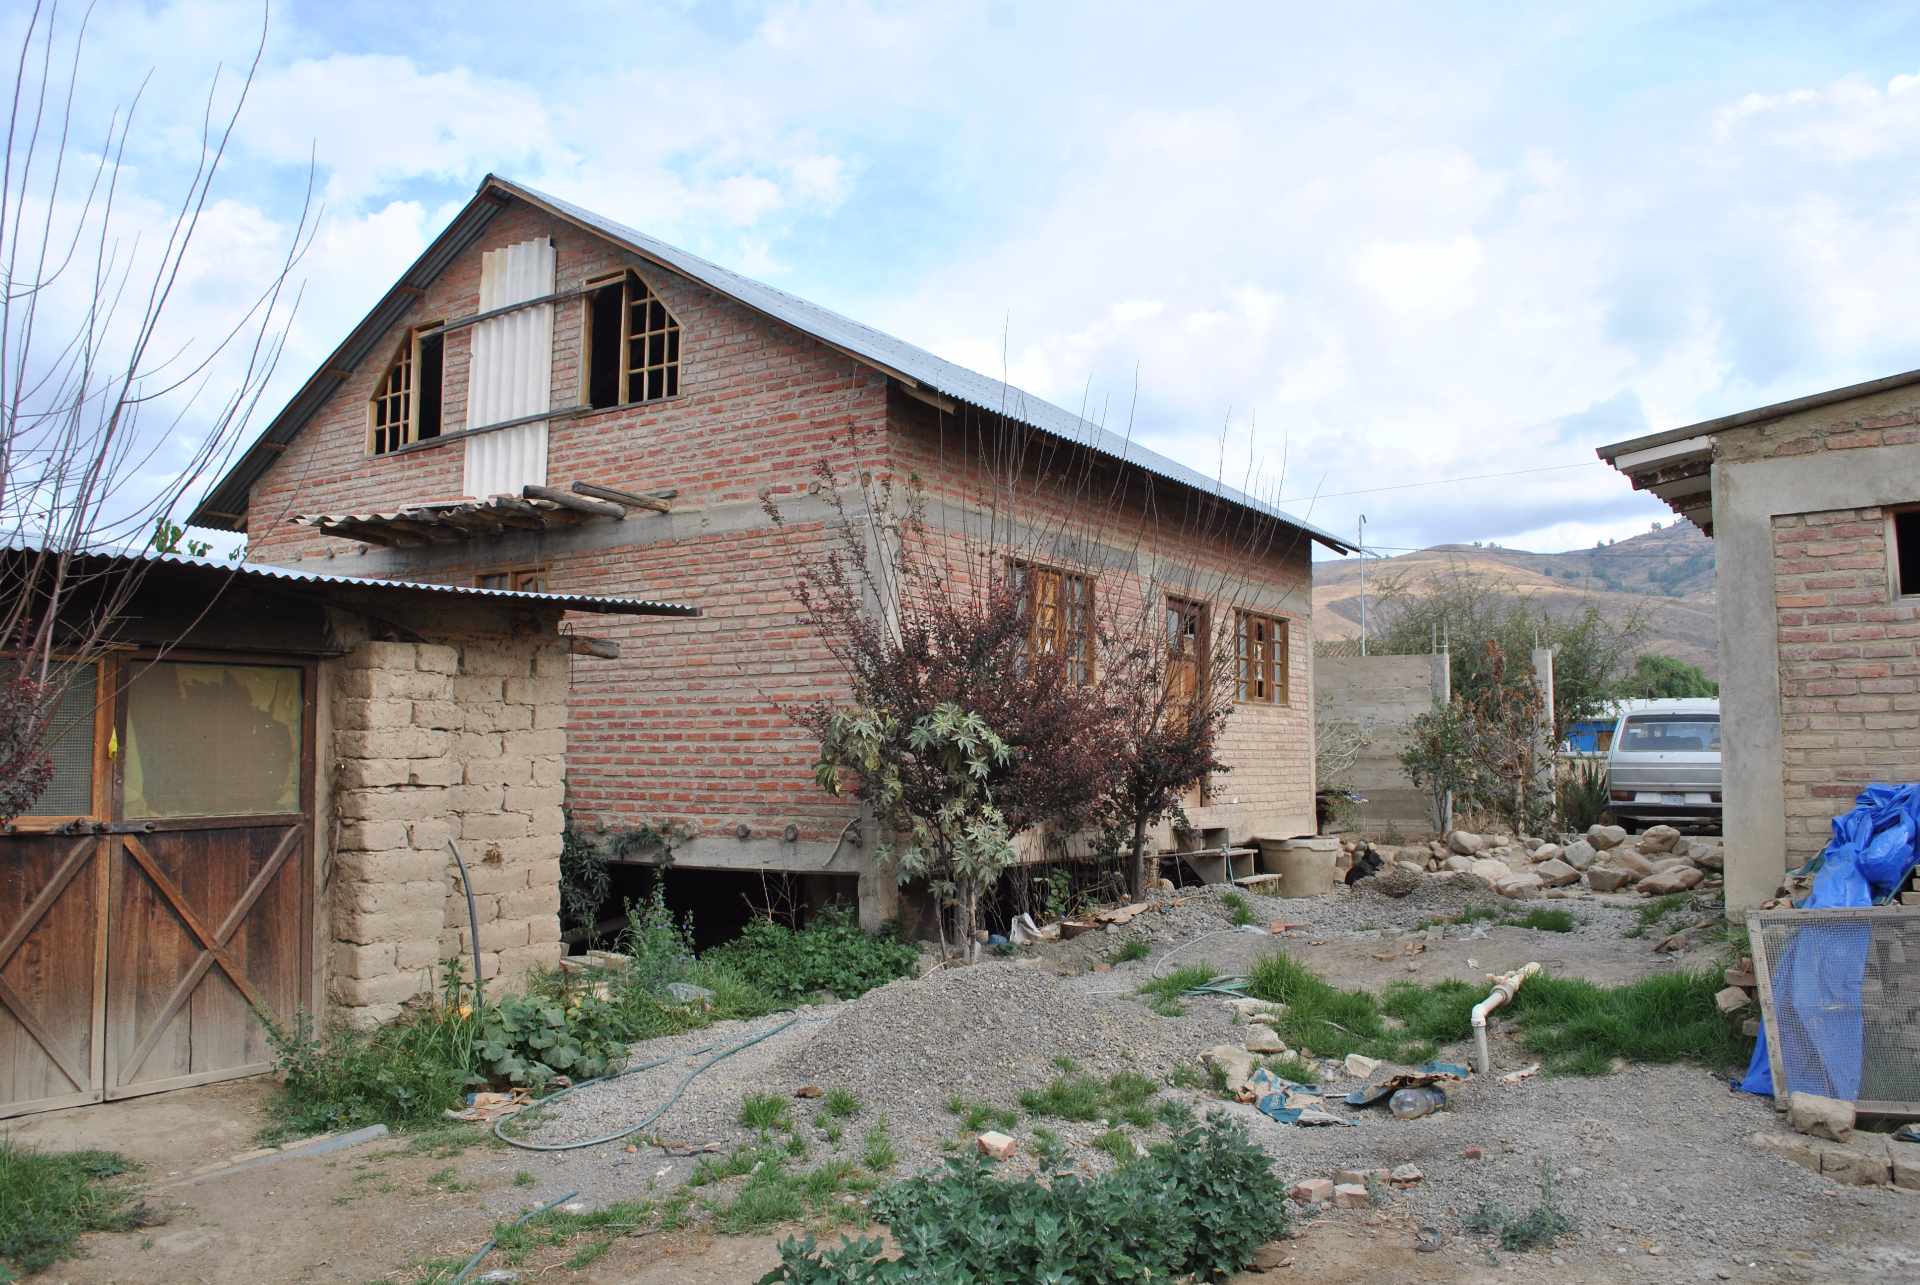 Terreno en VentaSan Benito. Carretera antigua Cochabamba - Santa Cruz, km. 37.8  Foto 13